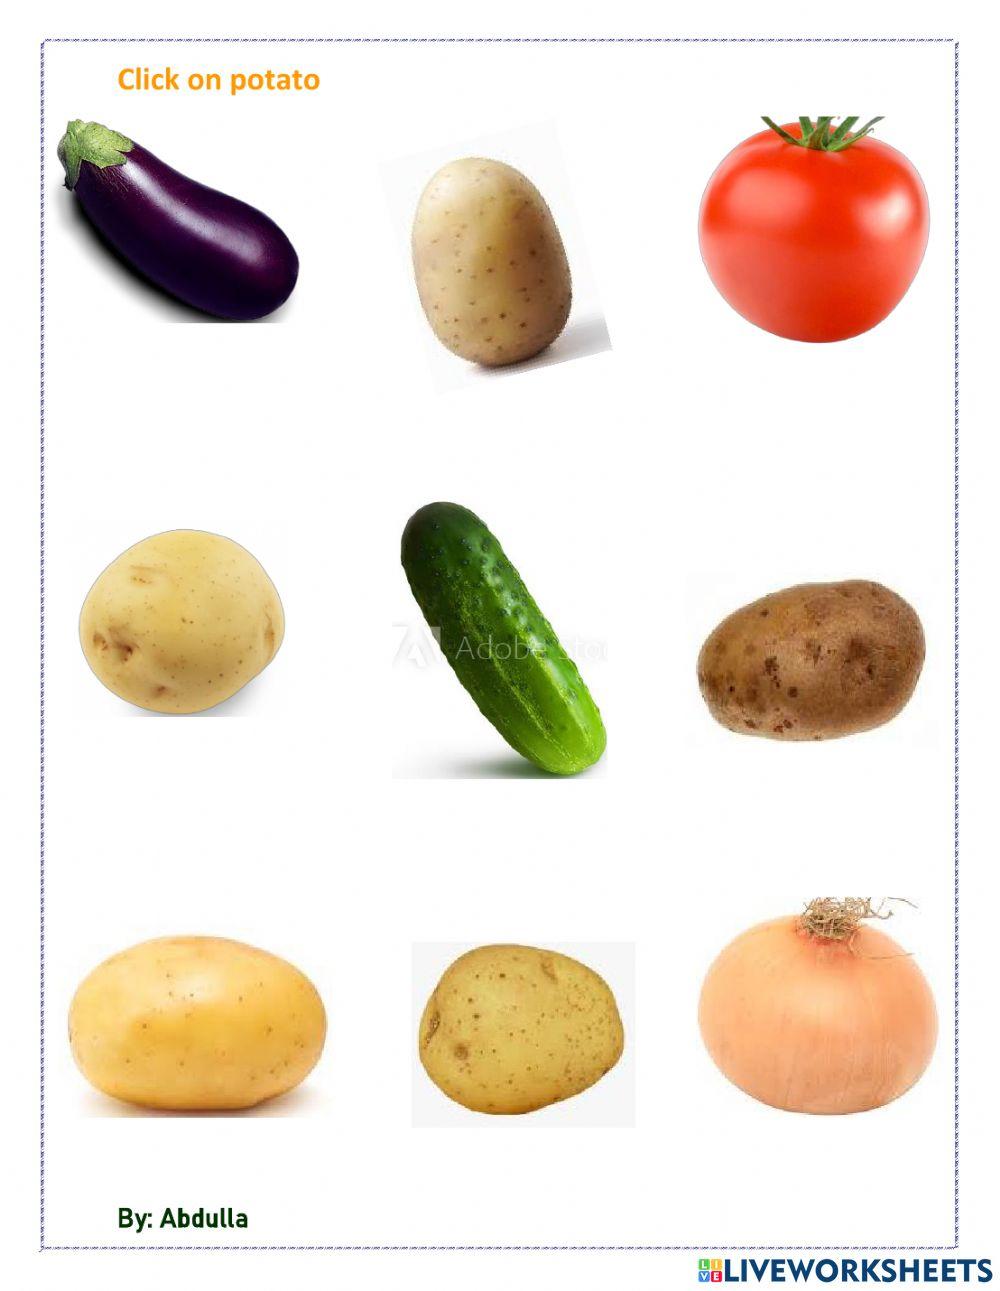 Identify potato